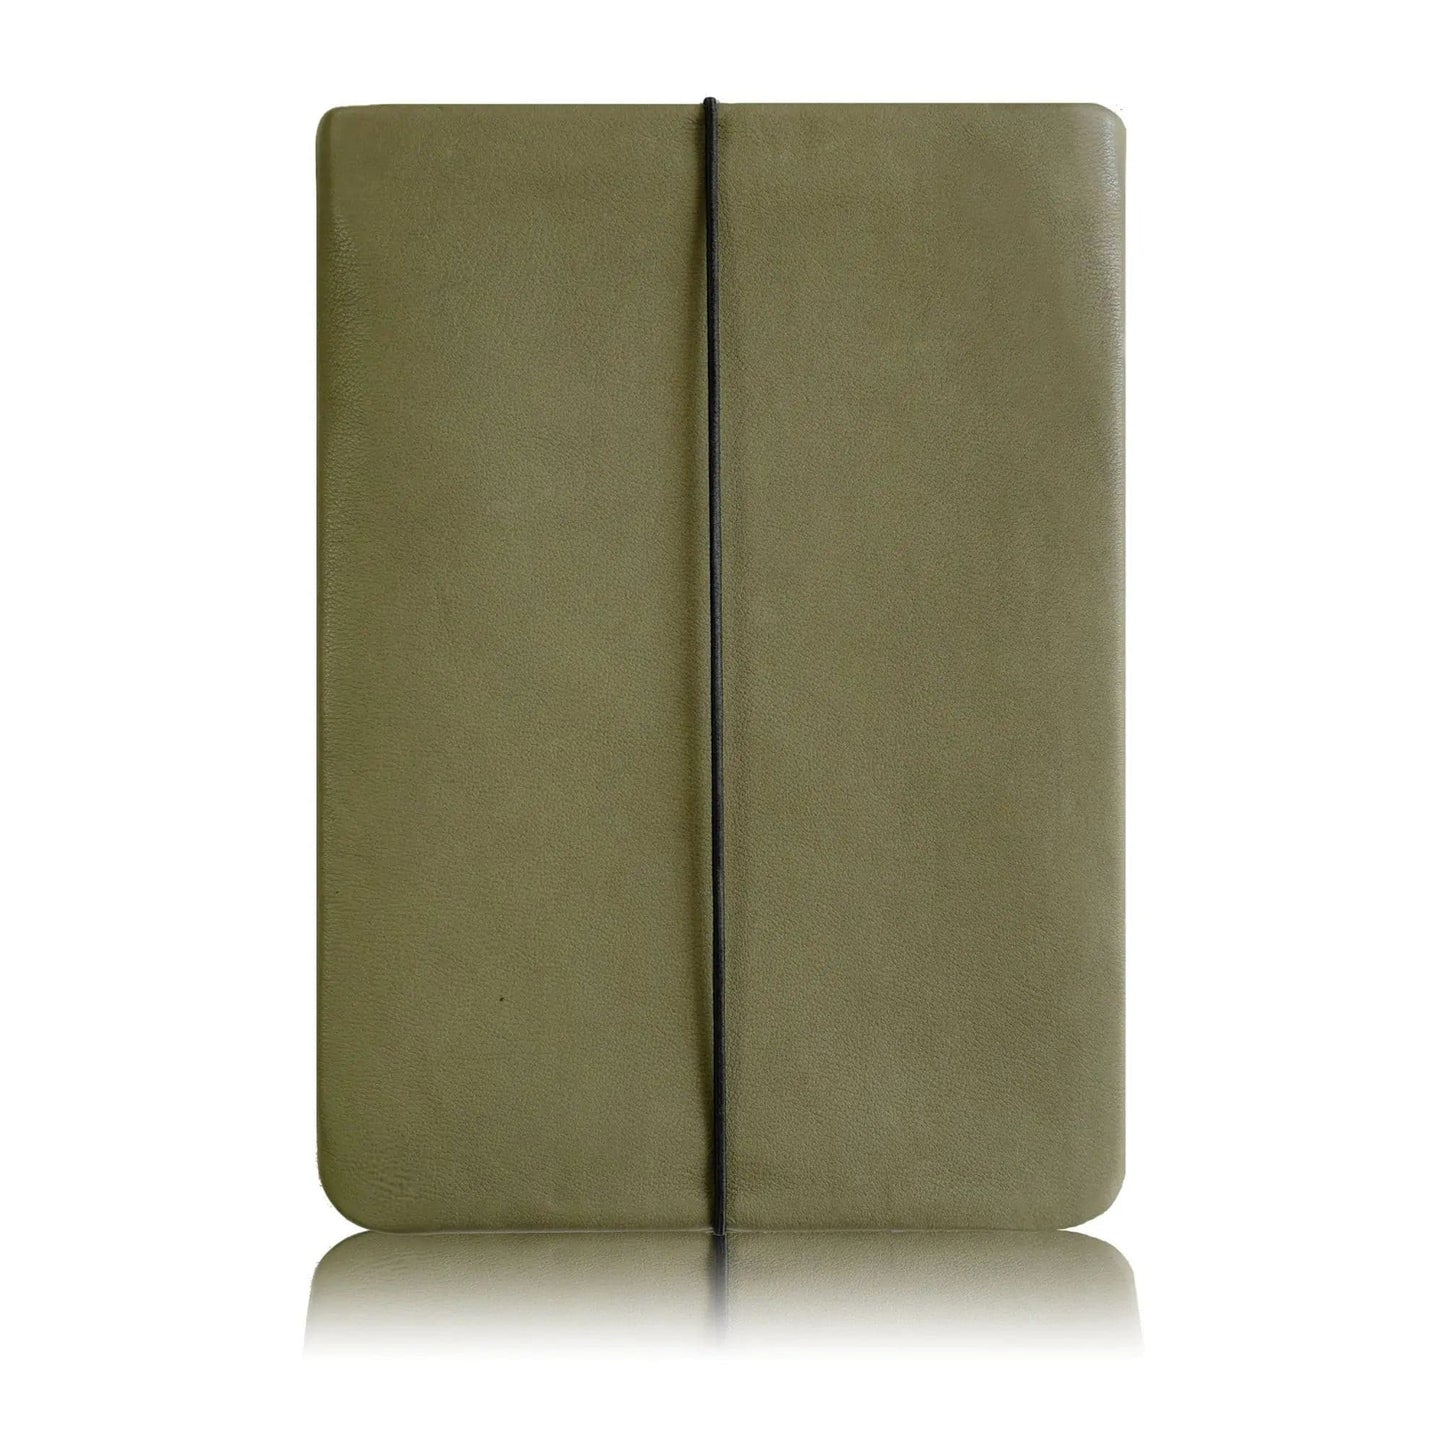 olivgrüne Lederhülle für Notebooks von Vandebag